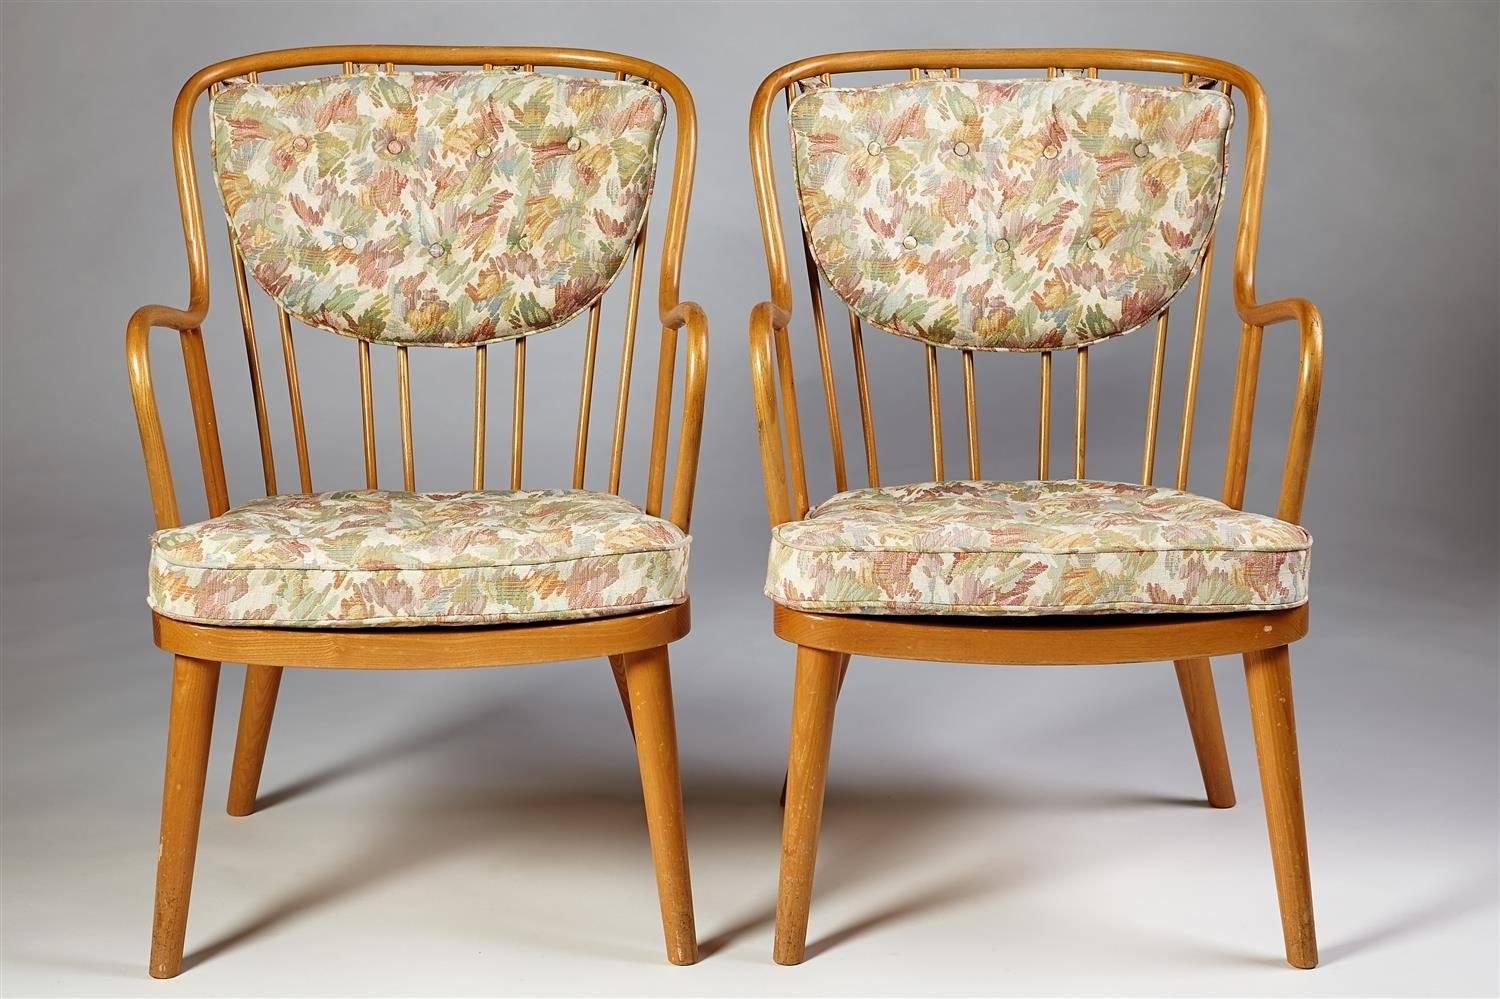 Scandinavian Modern Pair of Armchairs “the Lounge Chair” Model 1774 Designed by Aage Herman Olsen